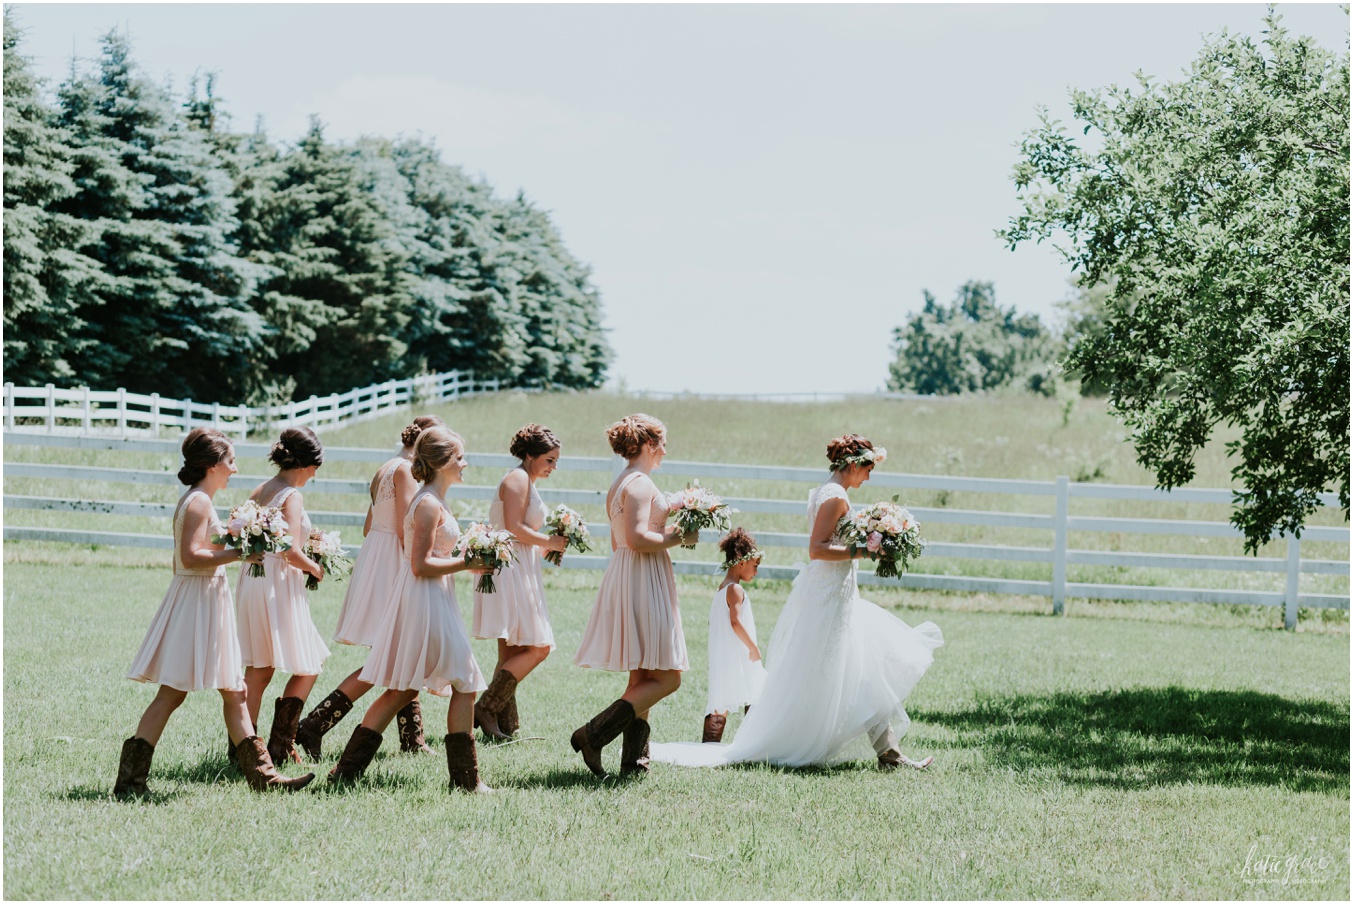 Katie Grace Photography, Hydrangea Blue Barn, Blush Bridesmaids Dress, Floral Crown, Cowboy Boots